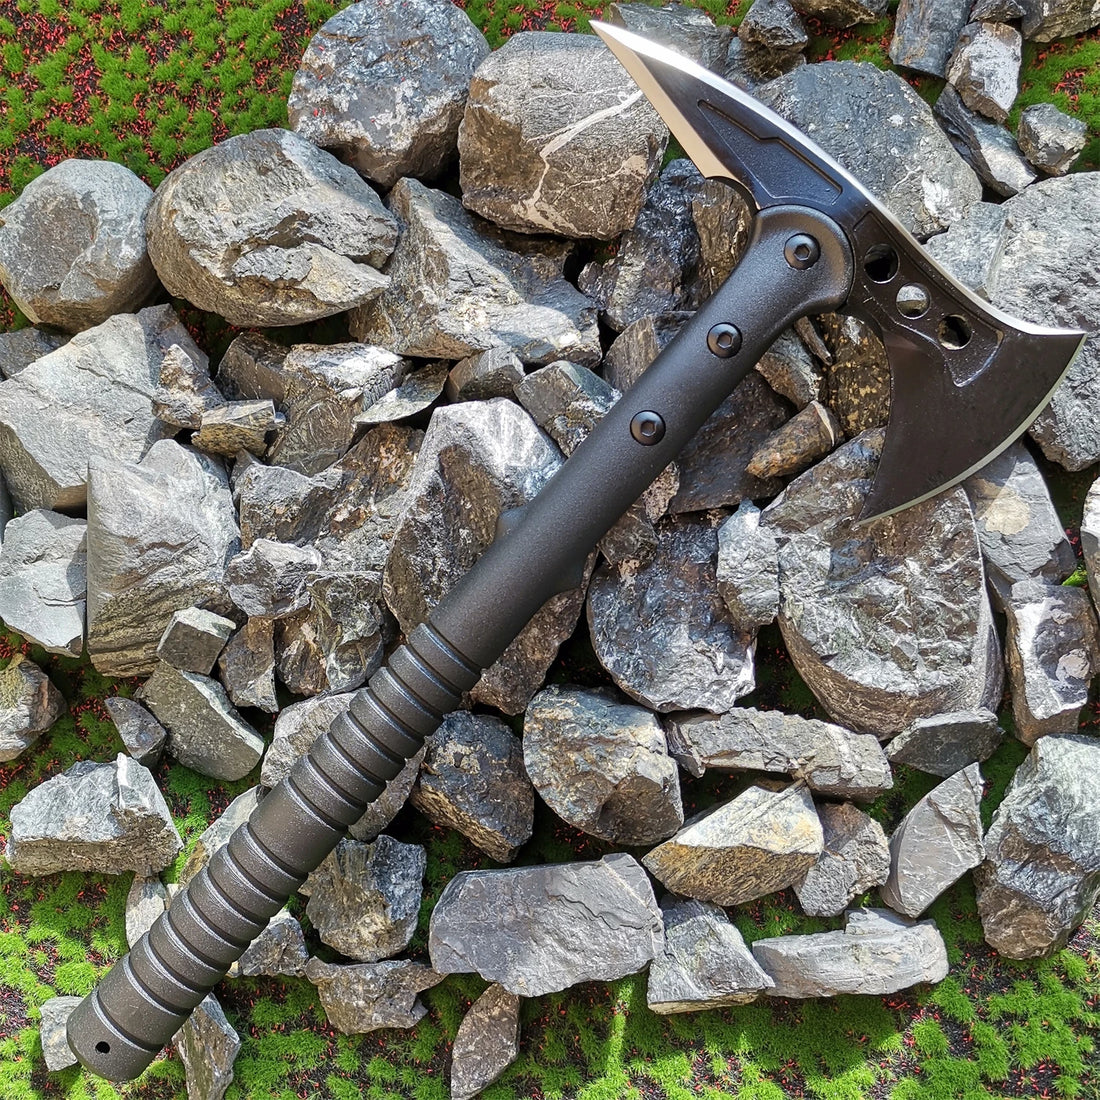  CS Tactical Axe Tomahawk Stainless Steel Blade Outdoor Hunting Camping Survival Axes Hand Tool Fire Axe Hatchet Axe #